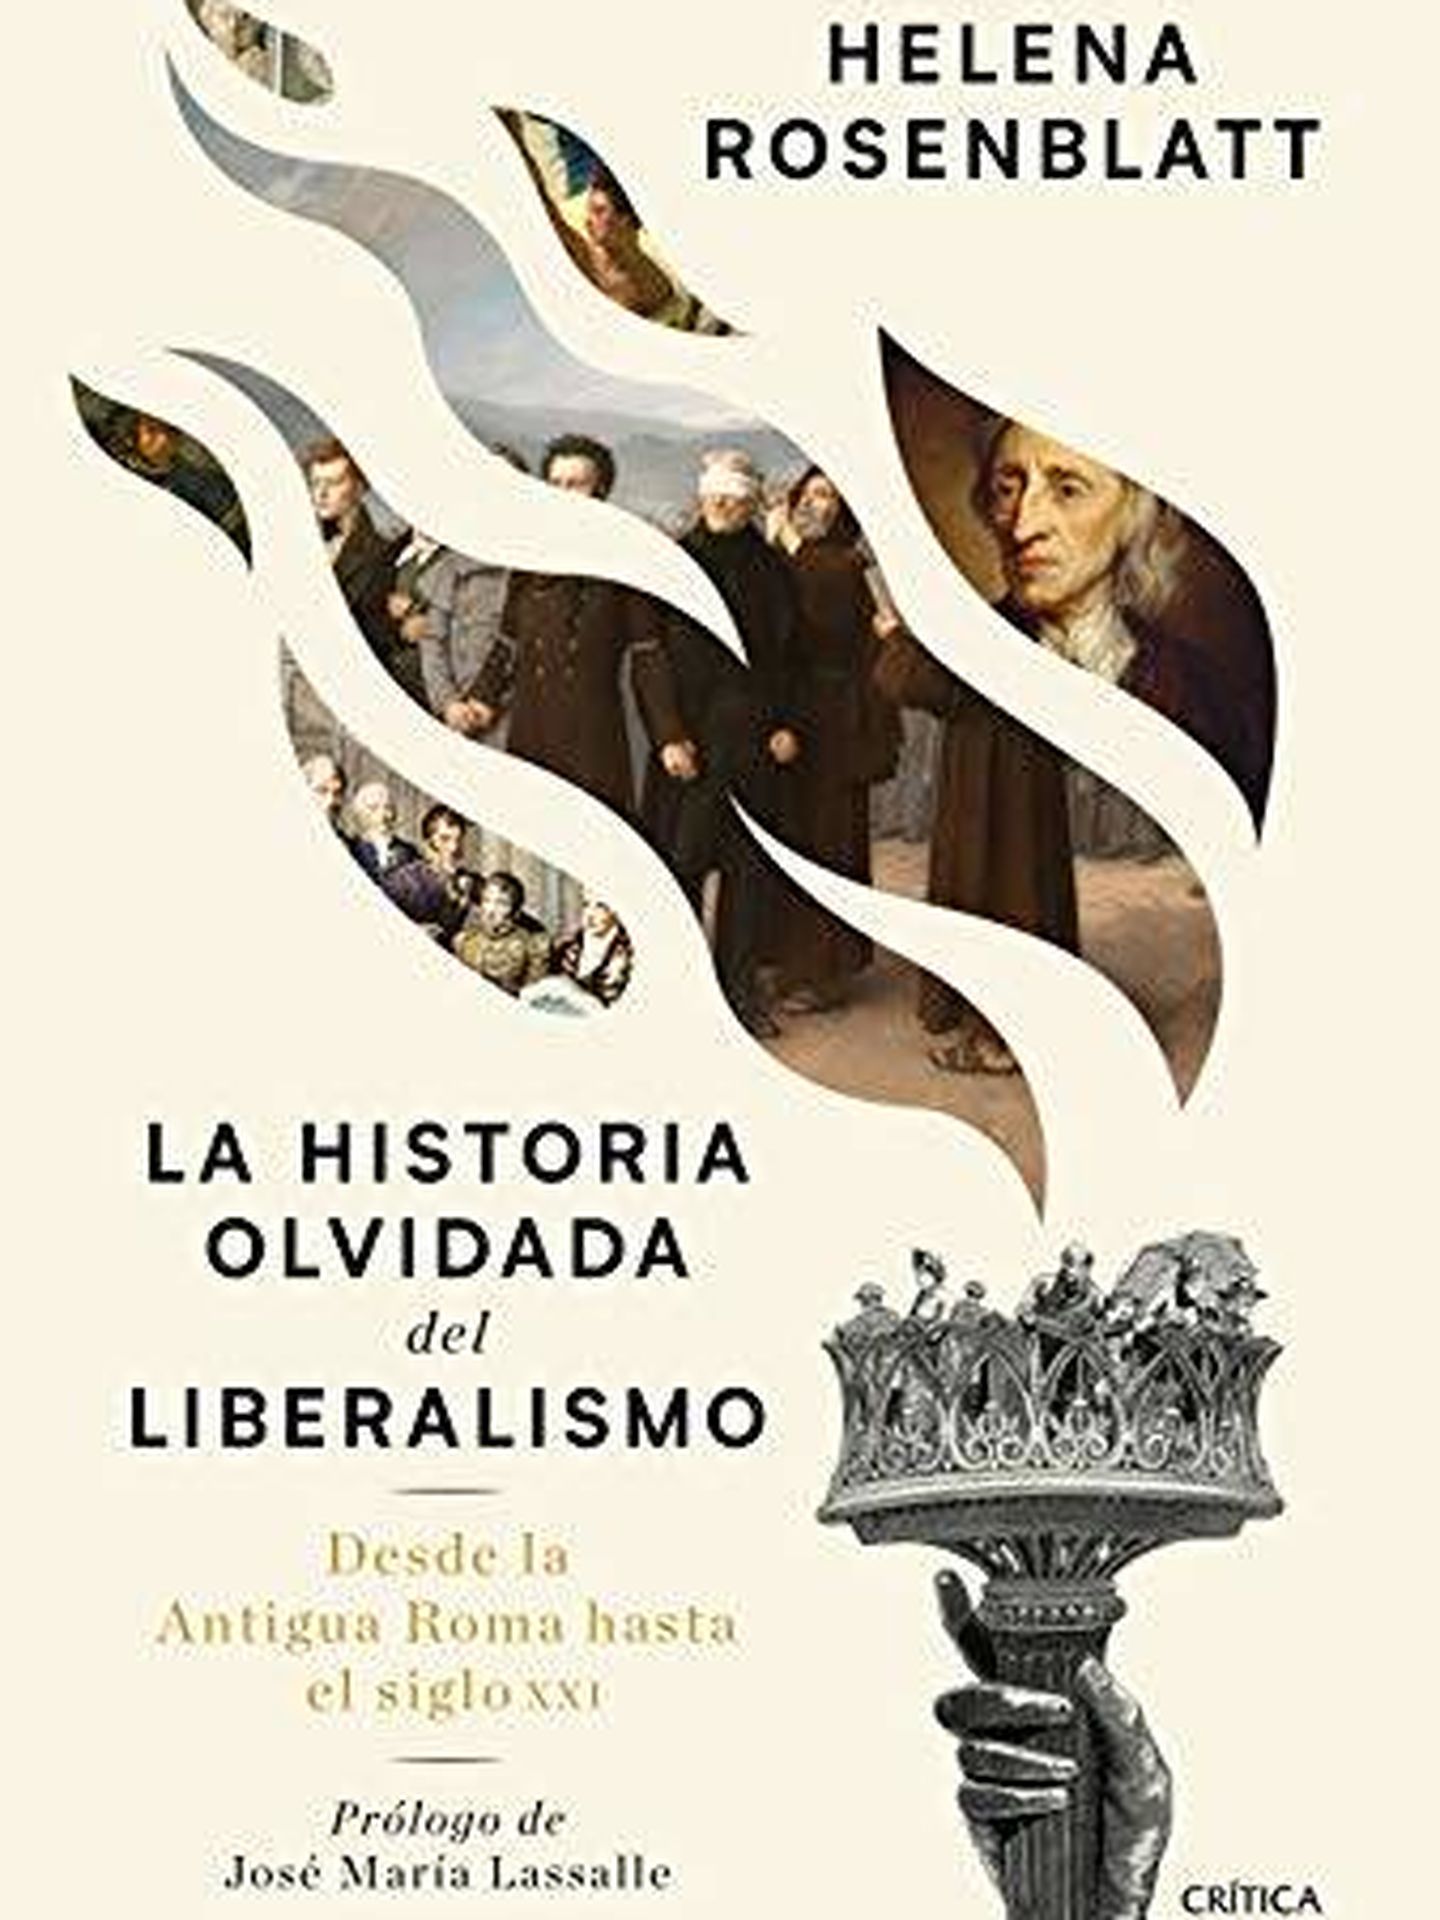 'La historia olvidada del liberalismo'